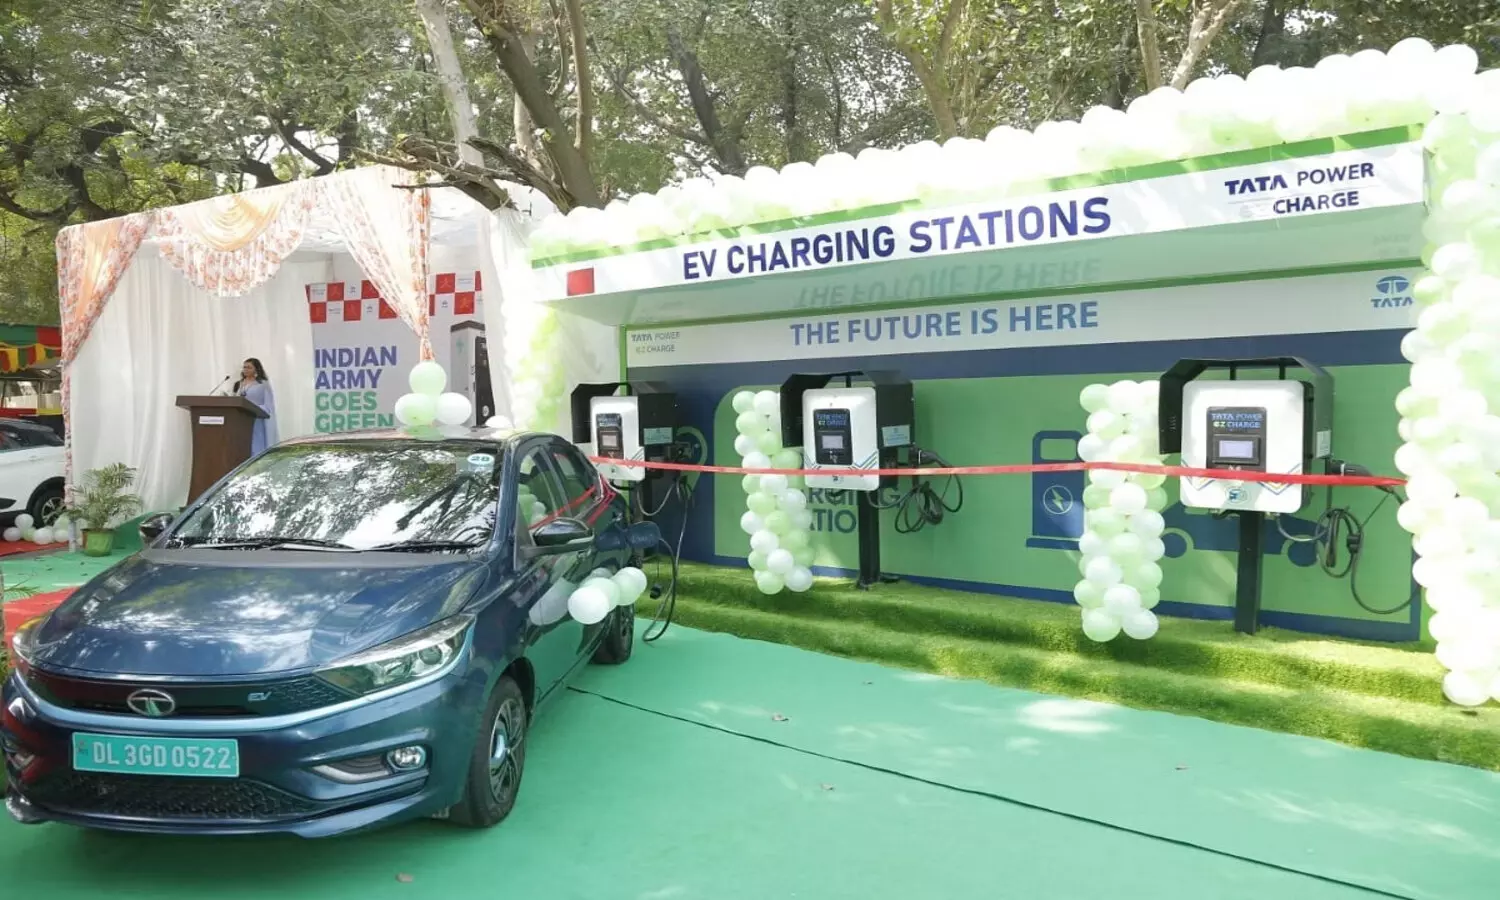 Tata charging stations